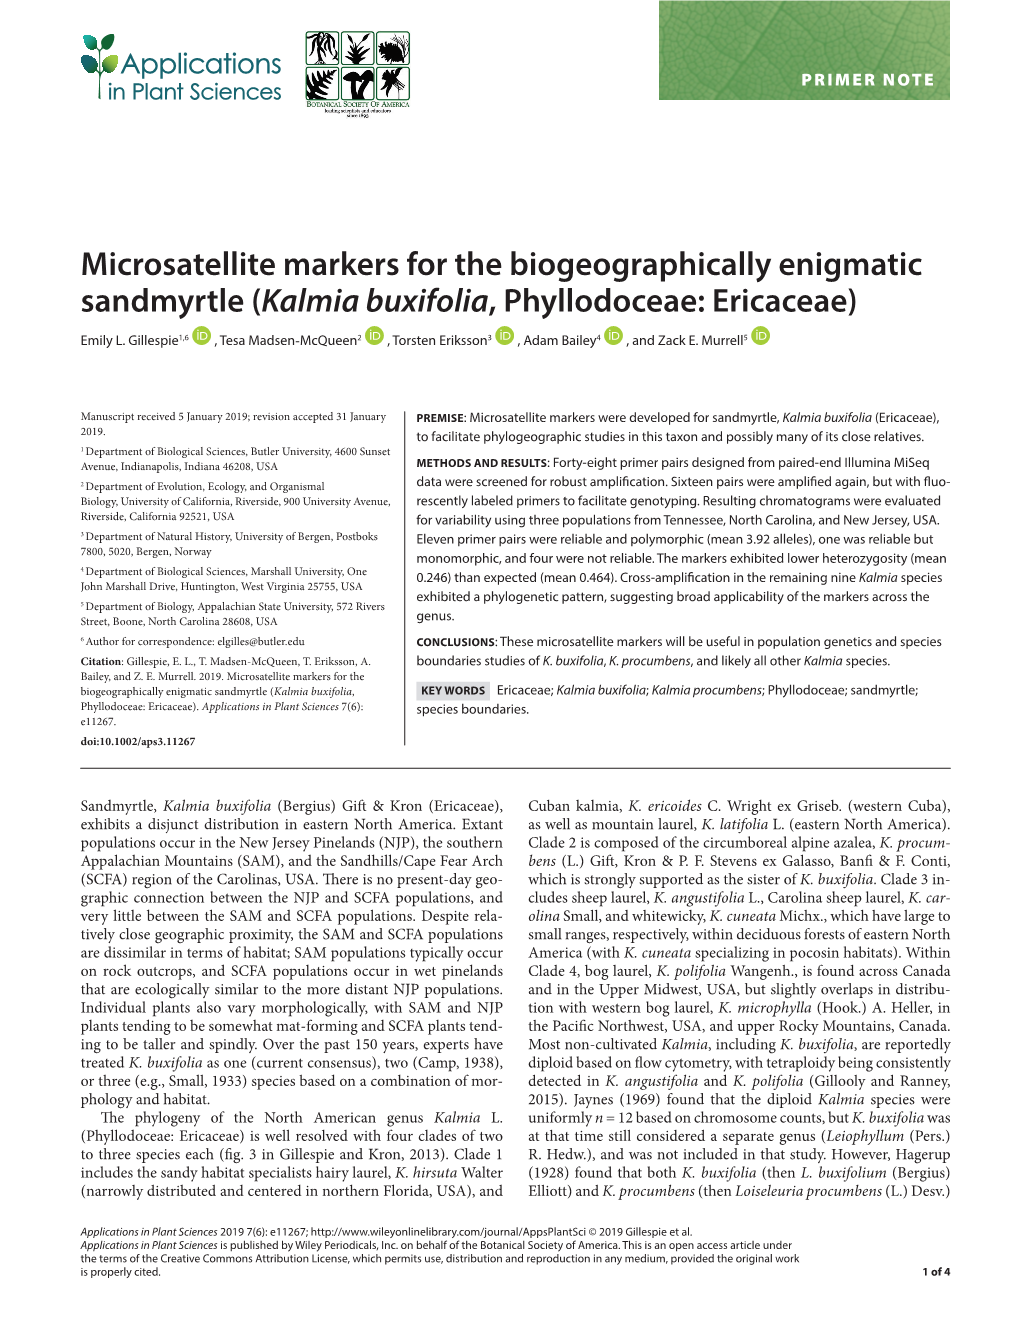 Microsatellite Markers for the Biogeographically Enigmatic Sandmyrtle (Kalmia Buxifolia, Phyllodoceae: Ericaceae)